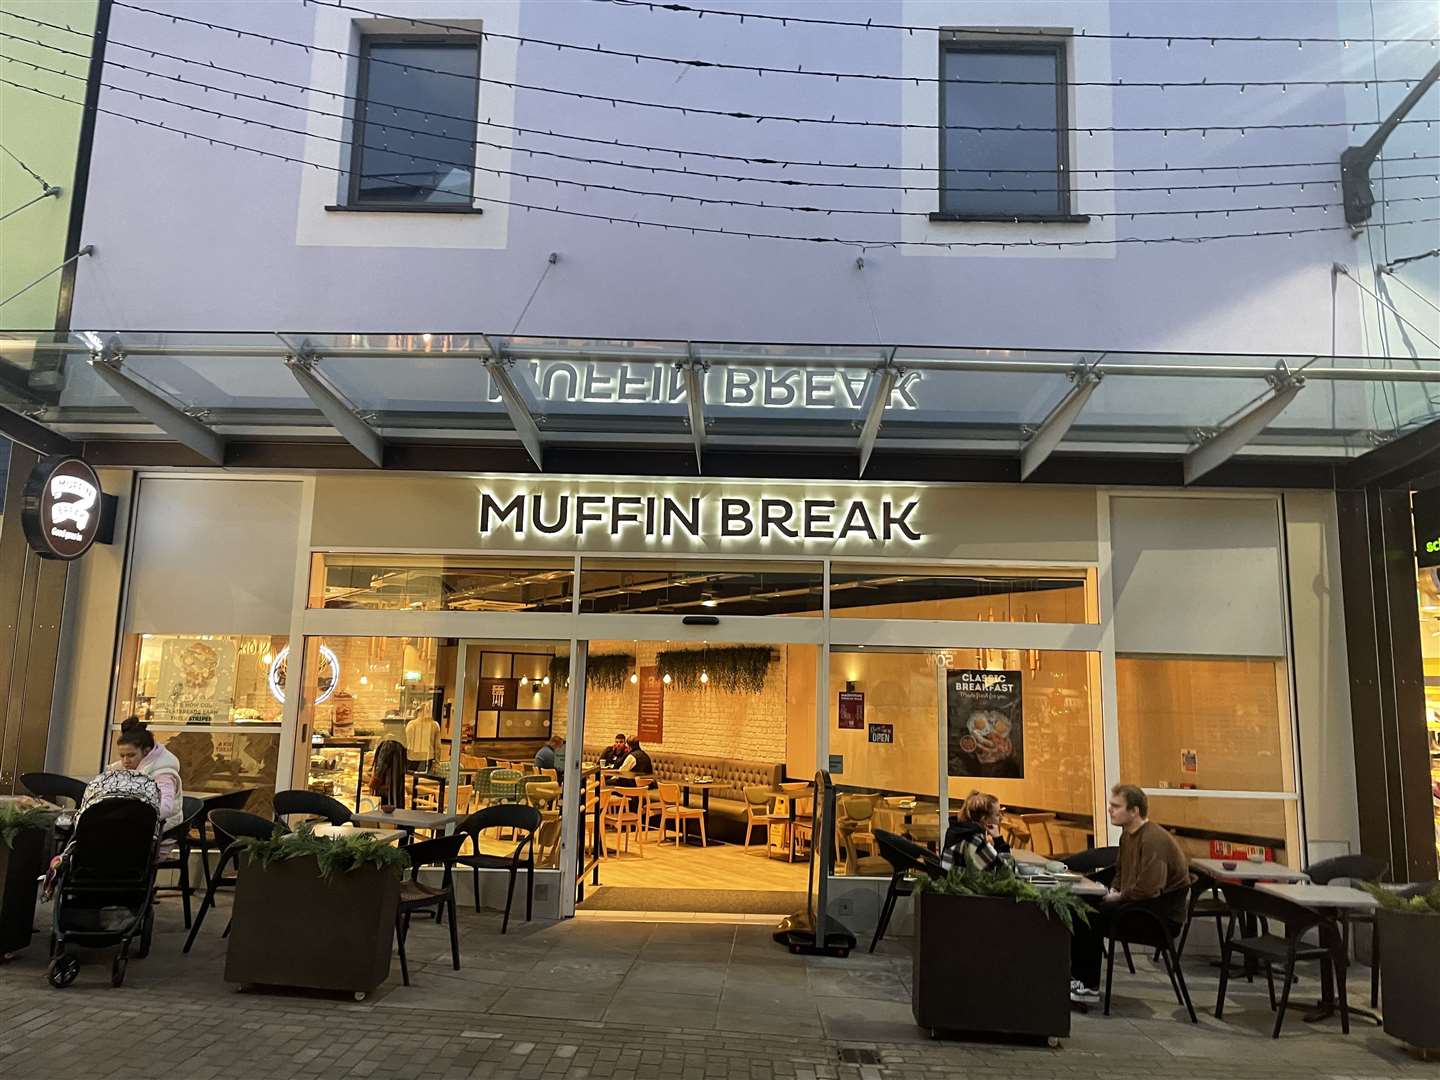 Muffin Break in Fremlin Walk, Maidstone (60646425)